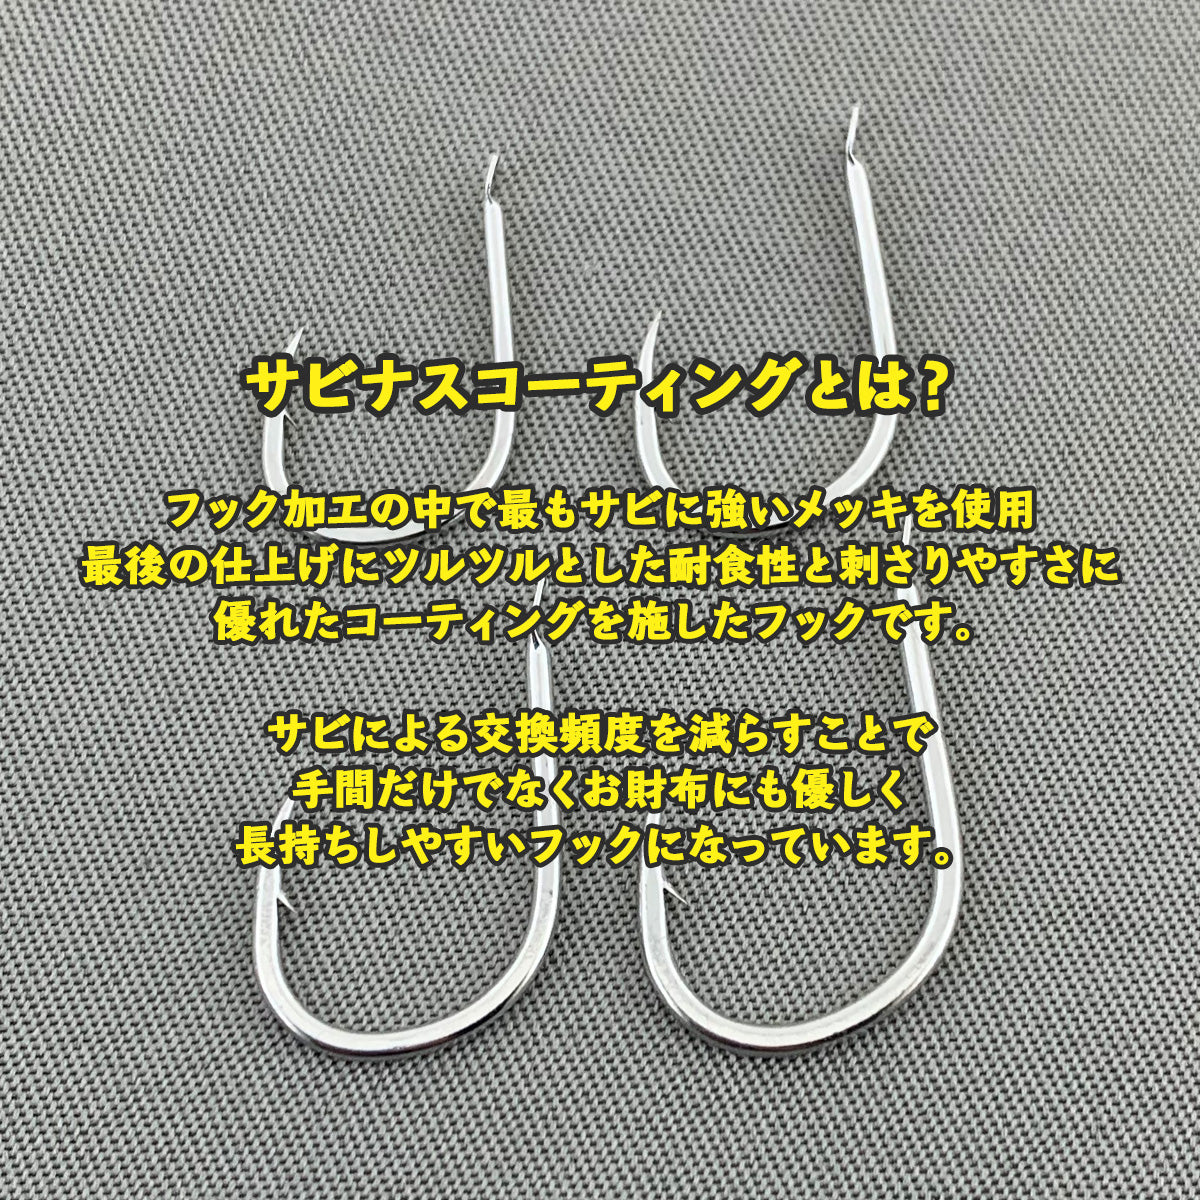 UMINO (ウミノ) タイラバ ビビ 微波動ネクタイ 極細ちょいピロカーリー 3セット入